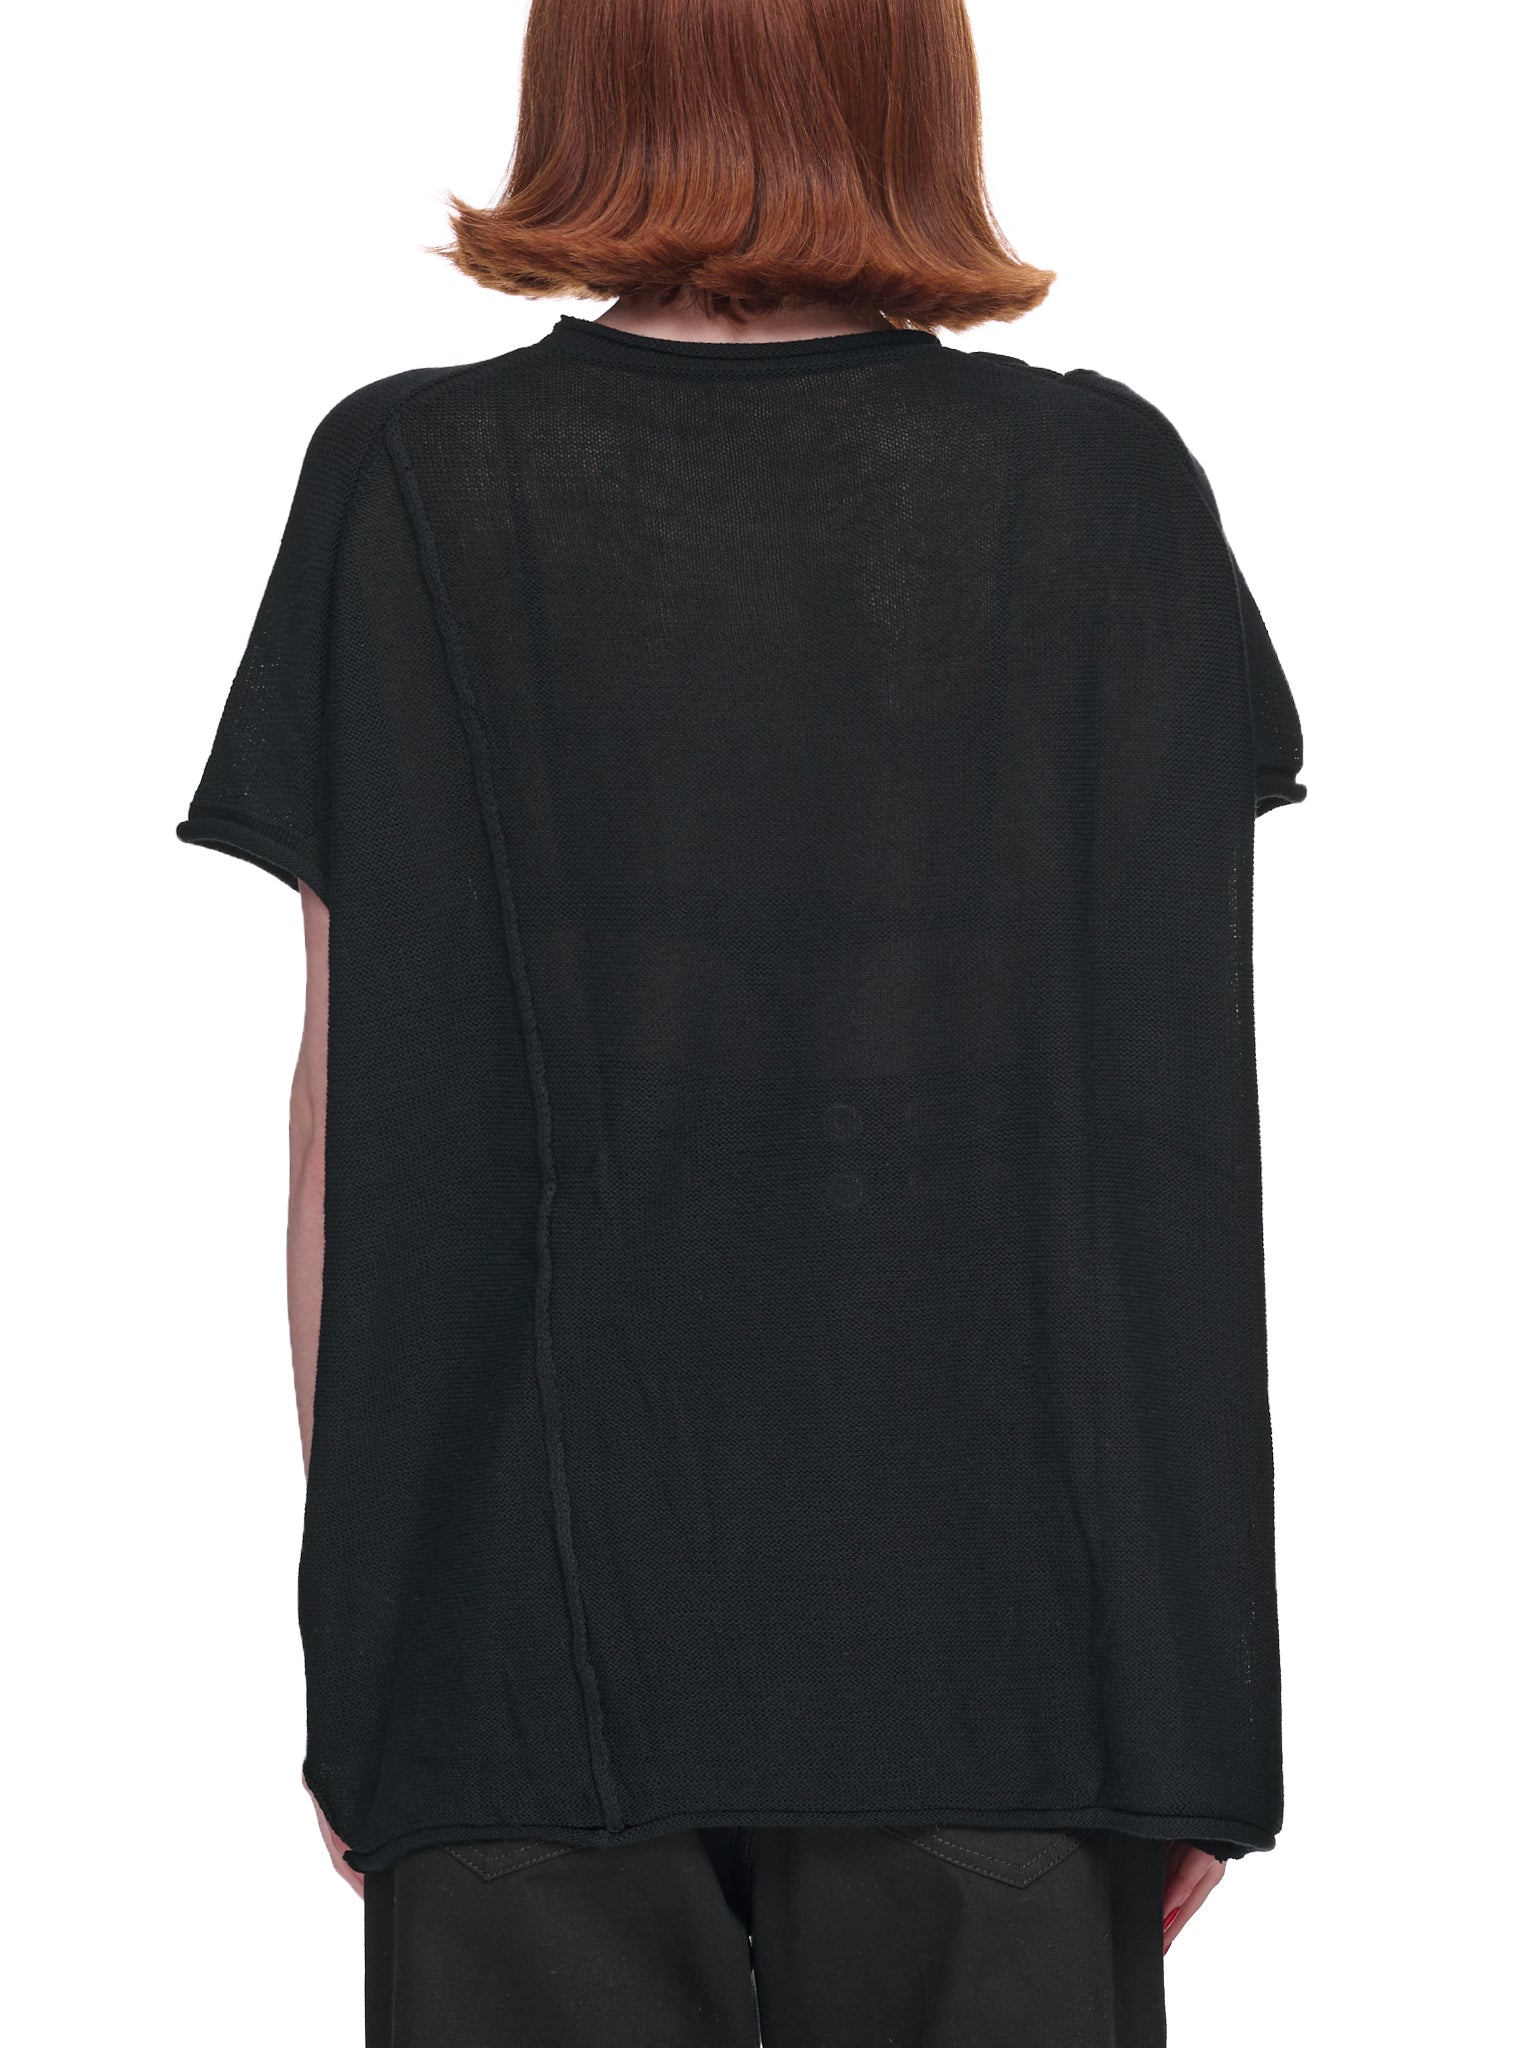 Braided T-Shirt (YI-K69-049-BLACK)